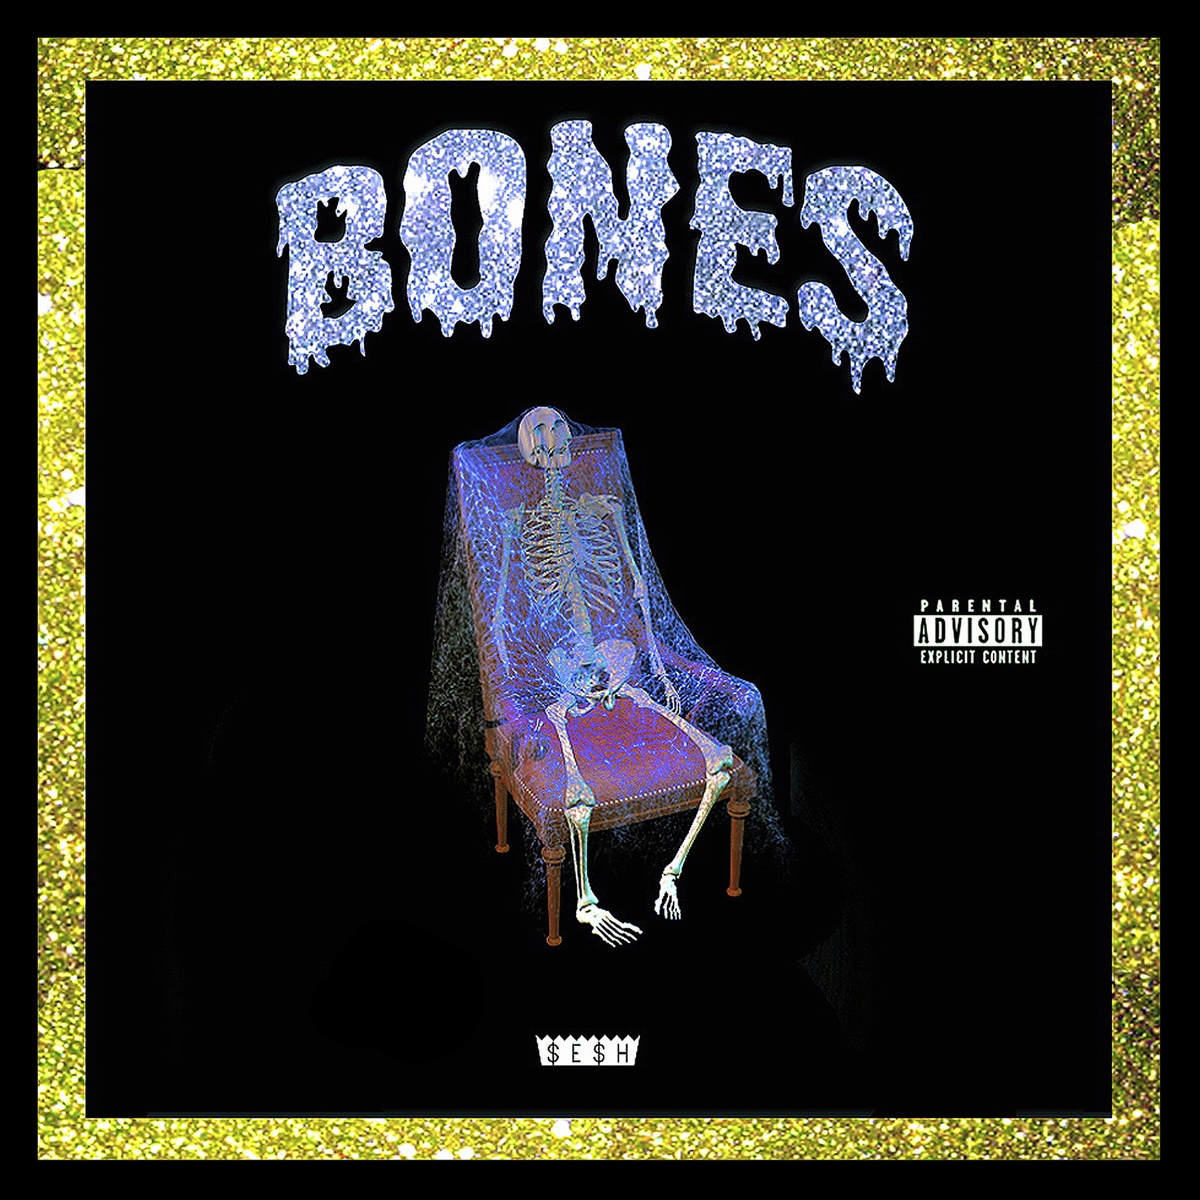 Bones last. Bones обложки альбомов. Bones (рэпер). Bones unrendered обложка. Bones обложки треков.